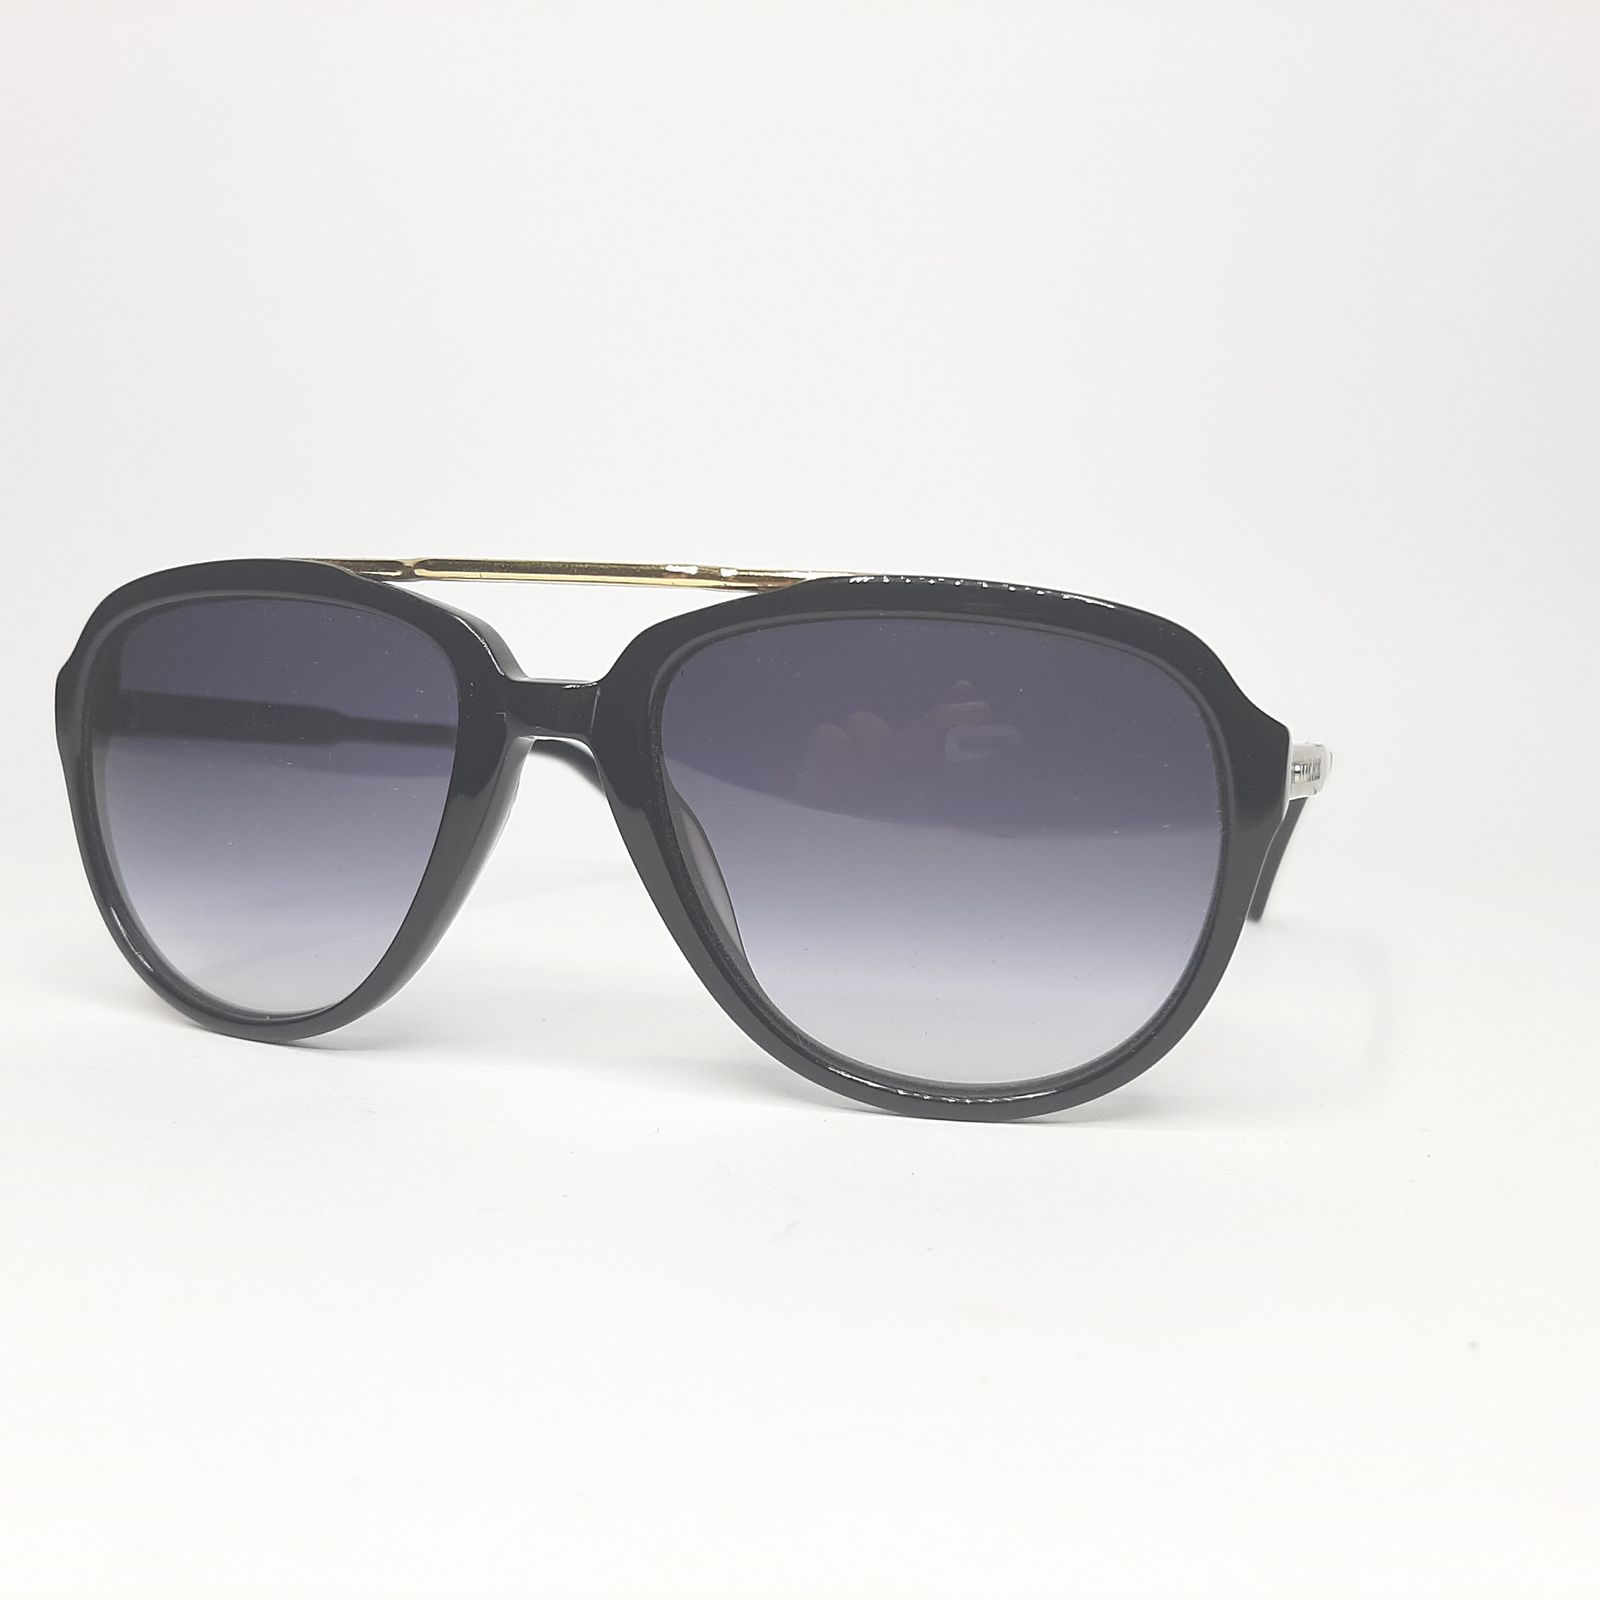 عینک آفتابی مارک جکوبس مدل MJ602s -  - 2